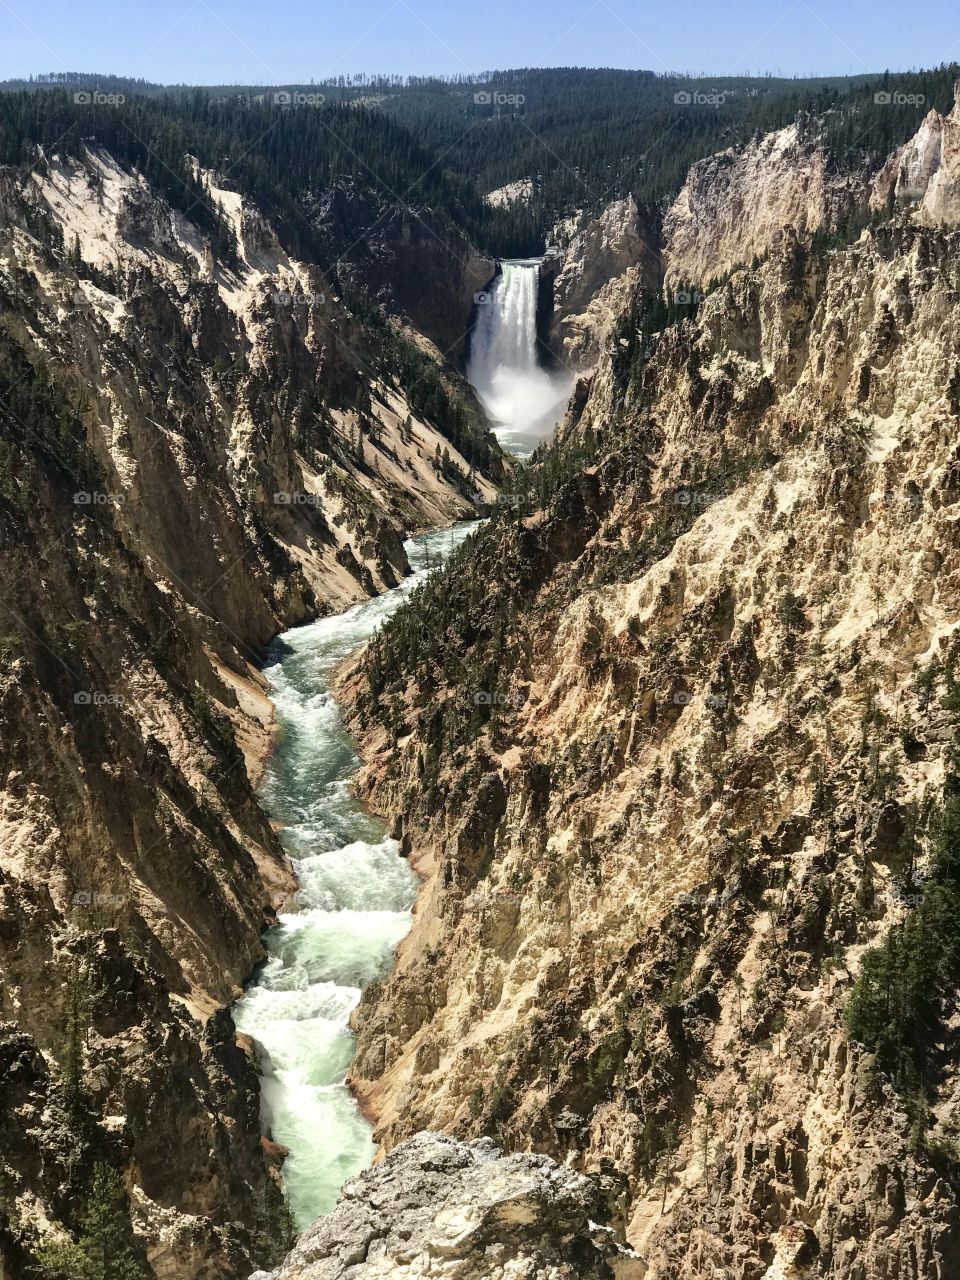 Awe inspiring waterfall, Yellowstone National Park, USA